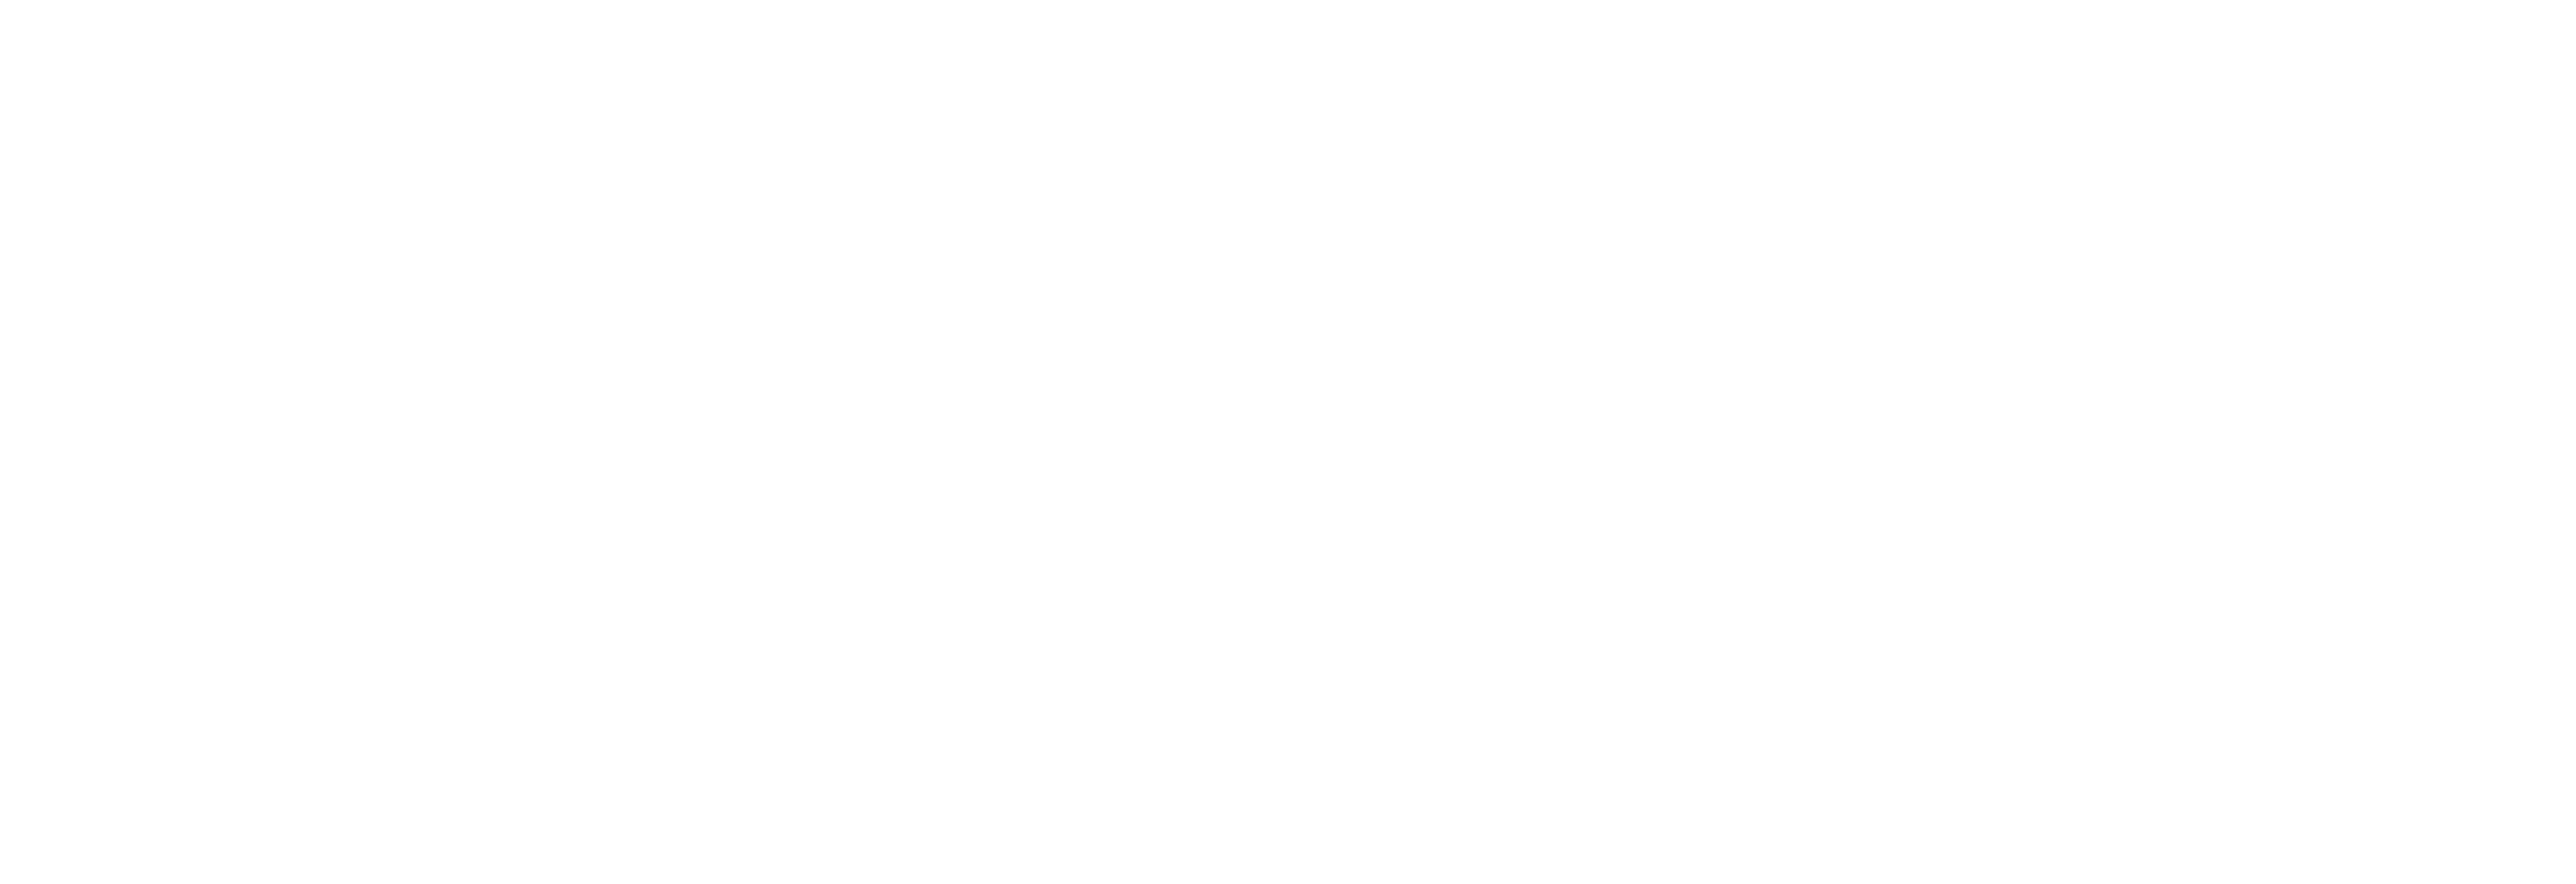 Zomboat! logo